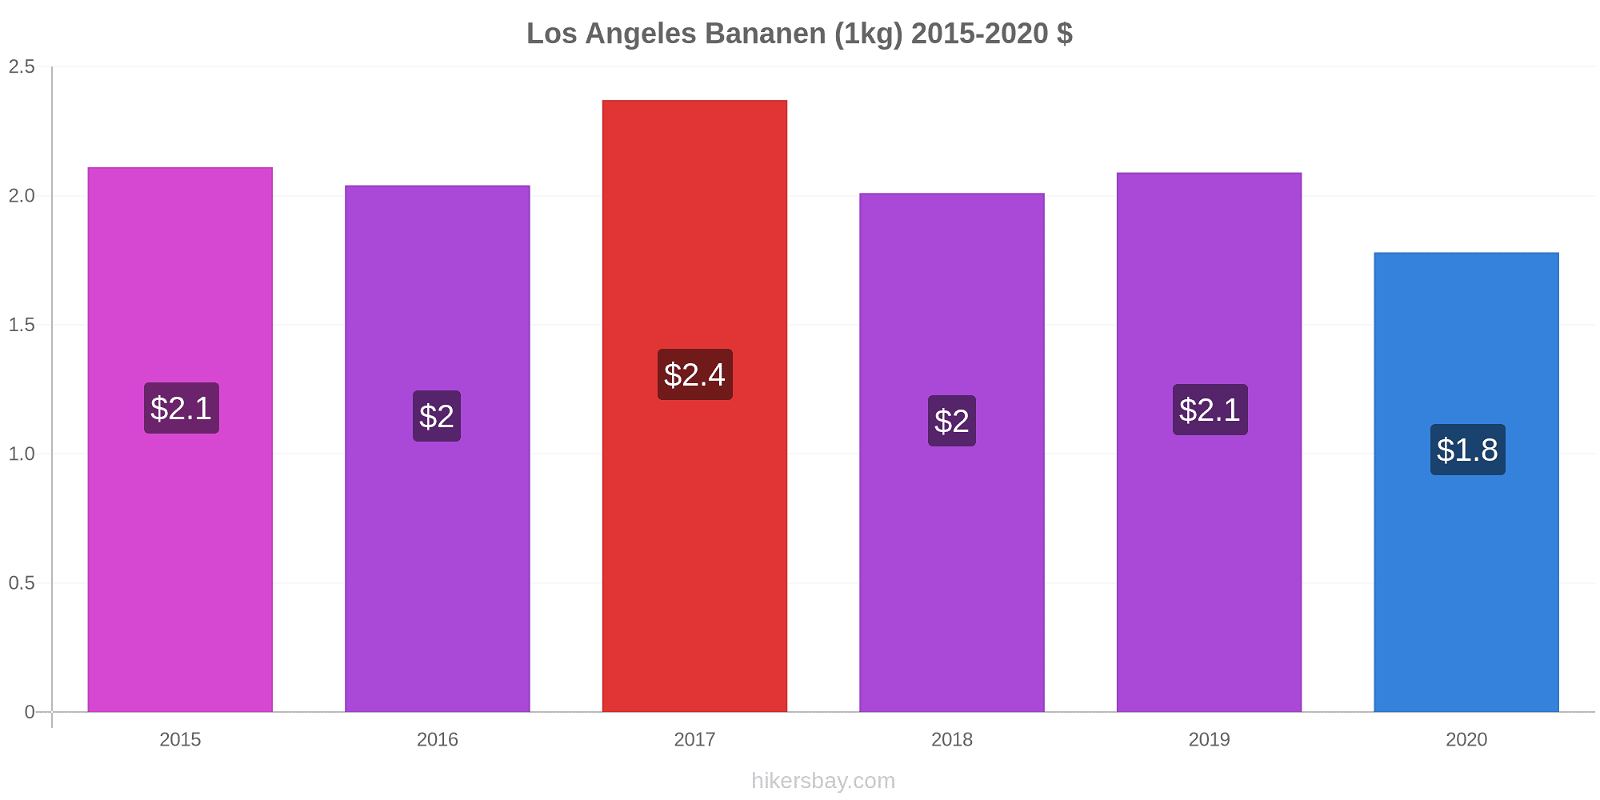 Los Angeles Preisänderungen Banane (1kg) hikersbay.com